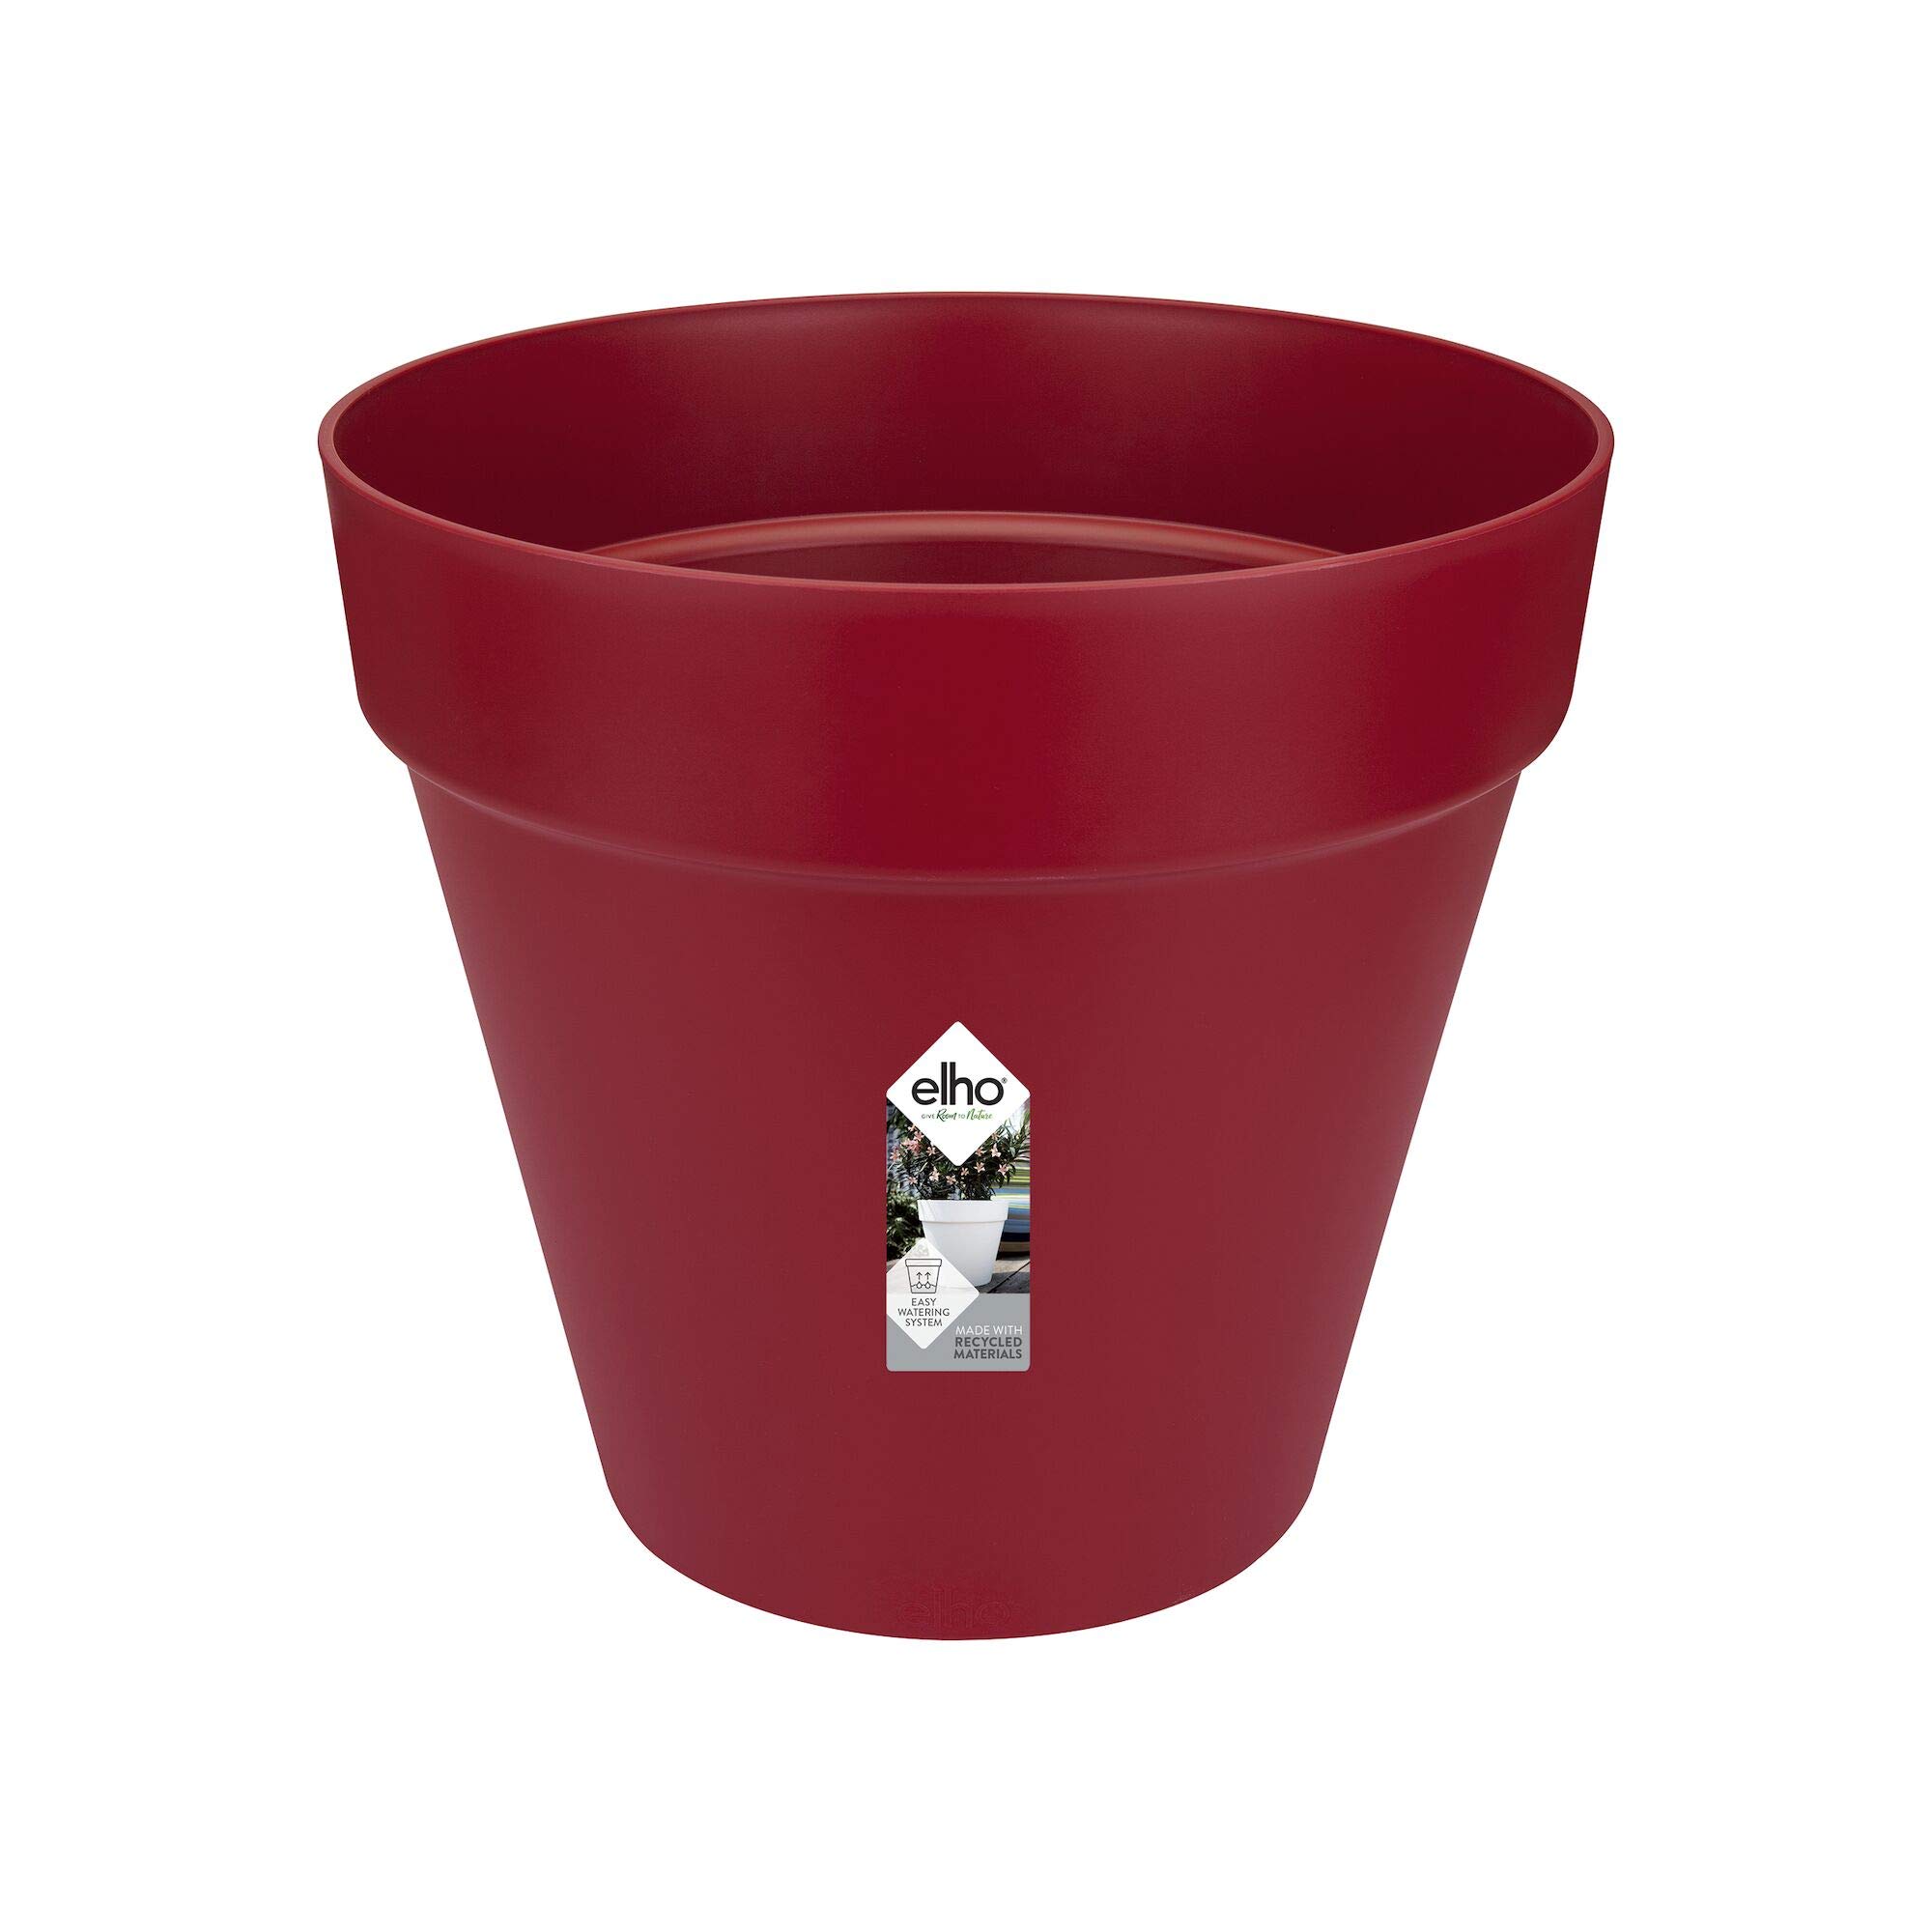 elho Loft Urban Rund 40 - Blumentopf für Außen - 100% recyceltem Plastik - Ø 38.5 x H 35.3 cm - Rot/Cranberry Rot